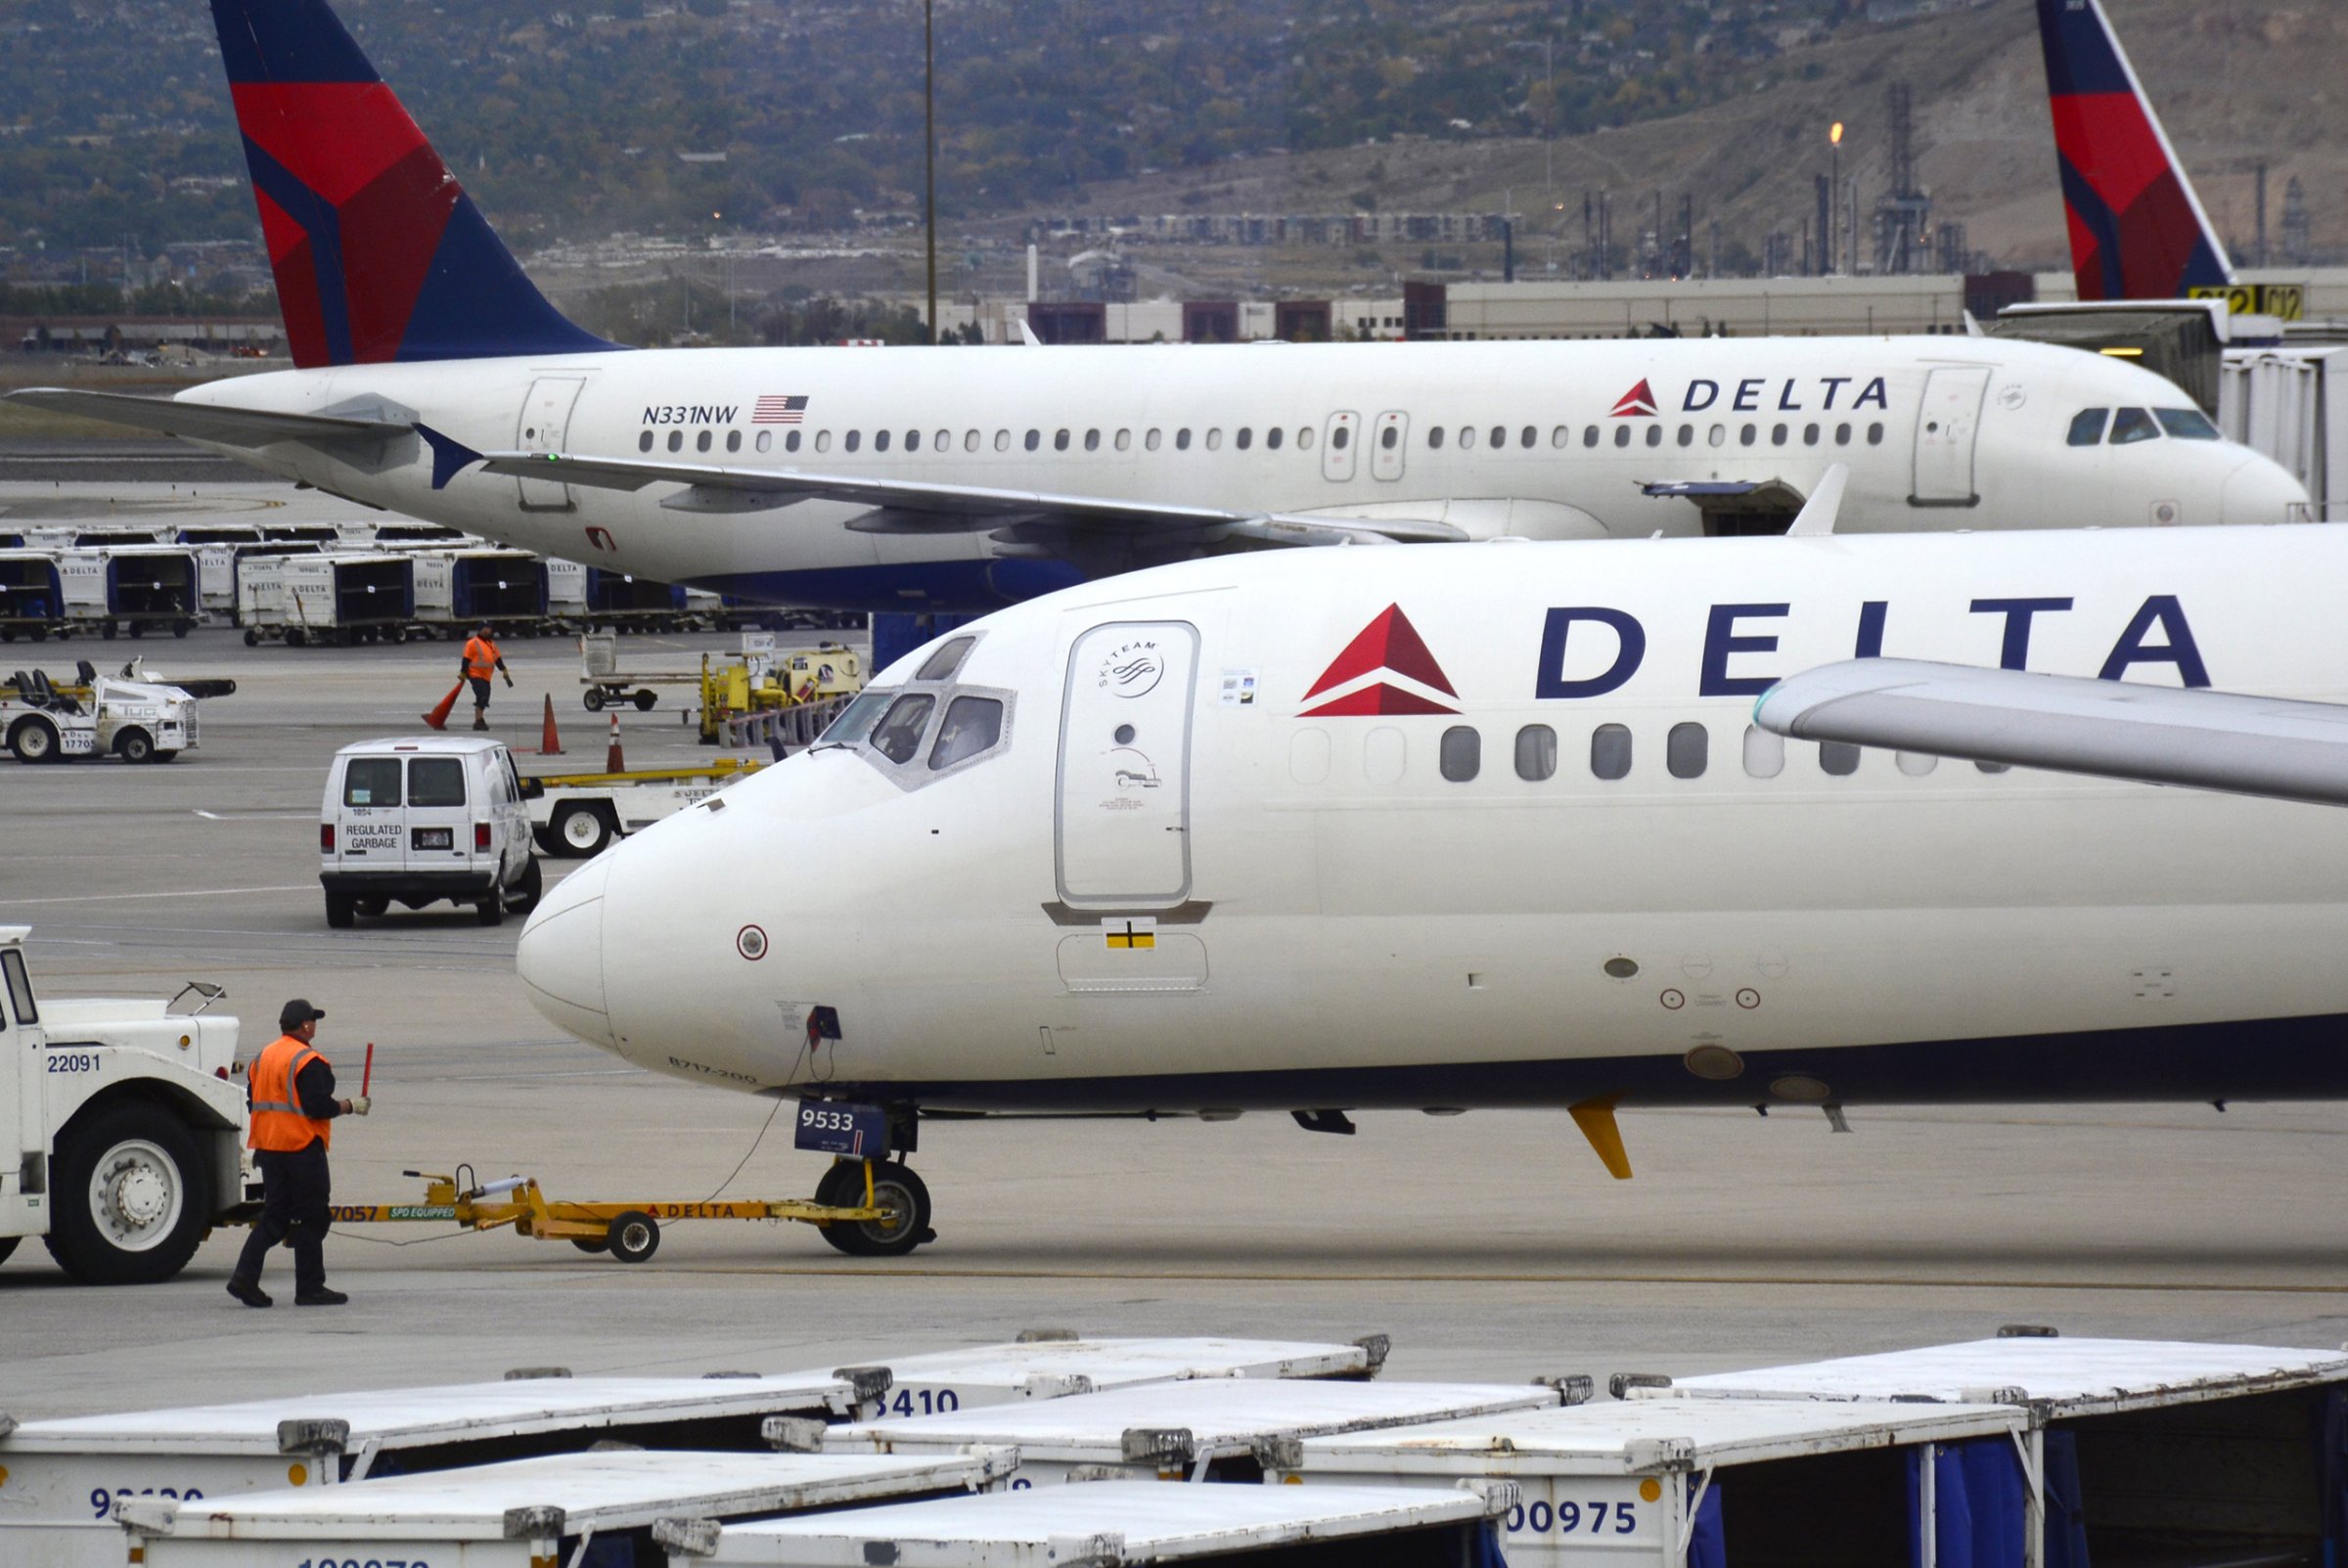 Delta Airlines passenger planes at Salt Lake City International Airport in Salt Lake City, Utah.